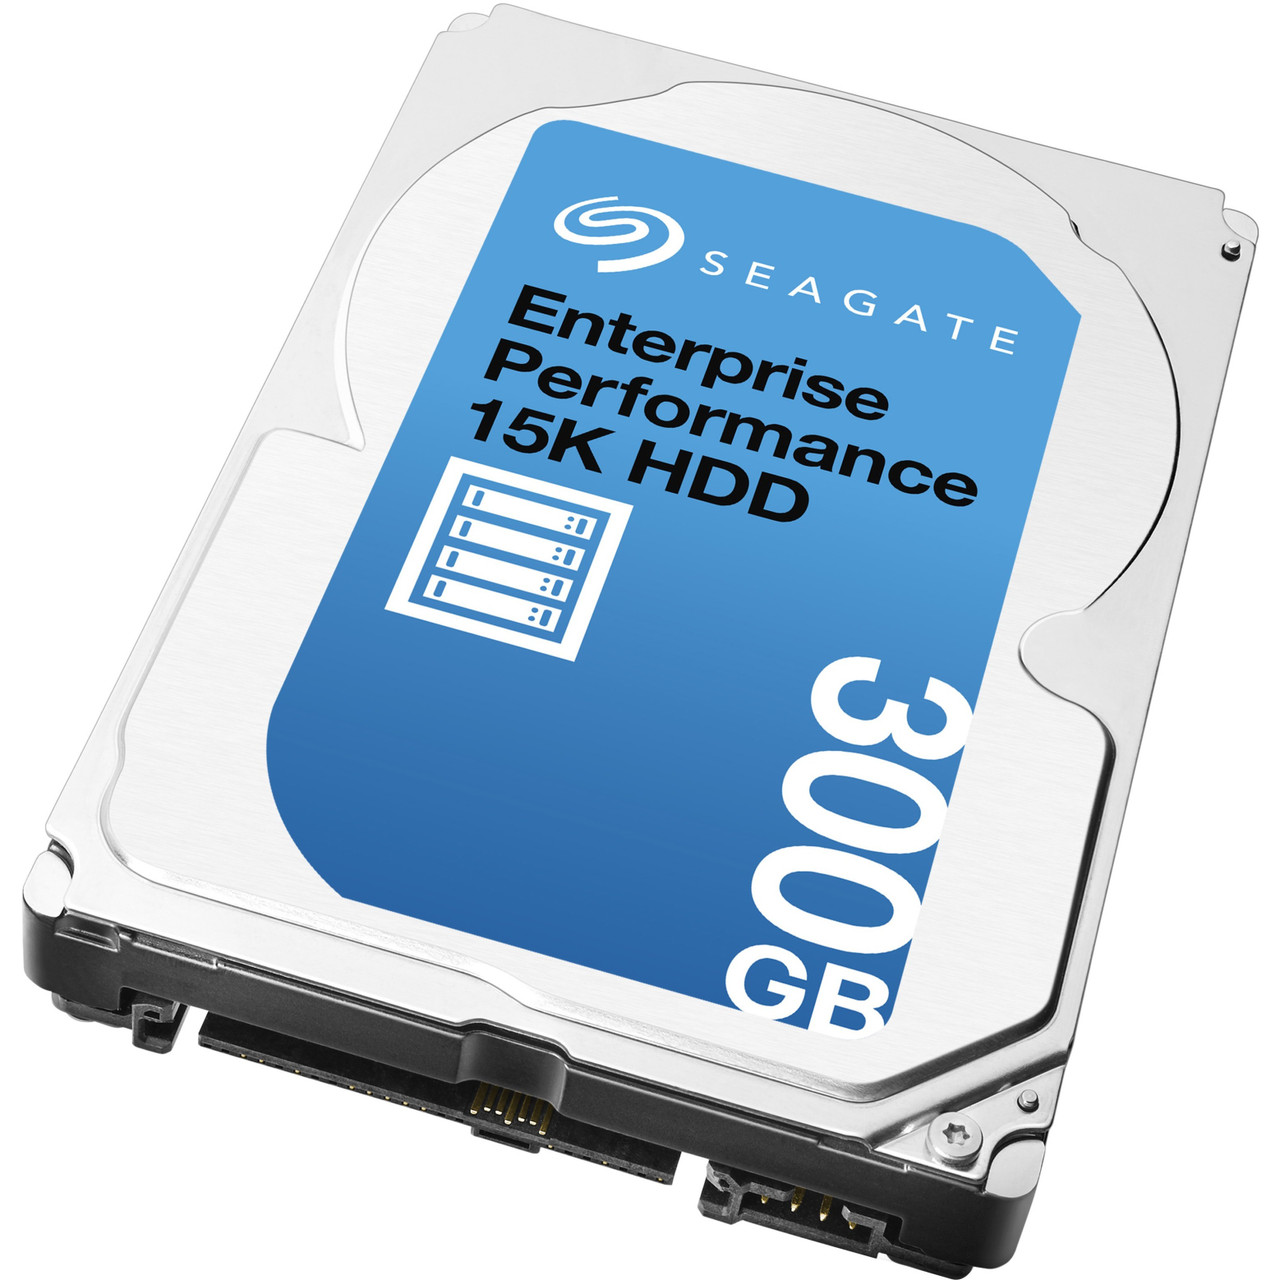 Seagate ST300MP0106 300 GB Hard Drive - 2.5" Internal - SAS (12Gb/s SAS)